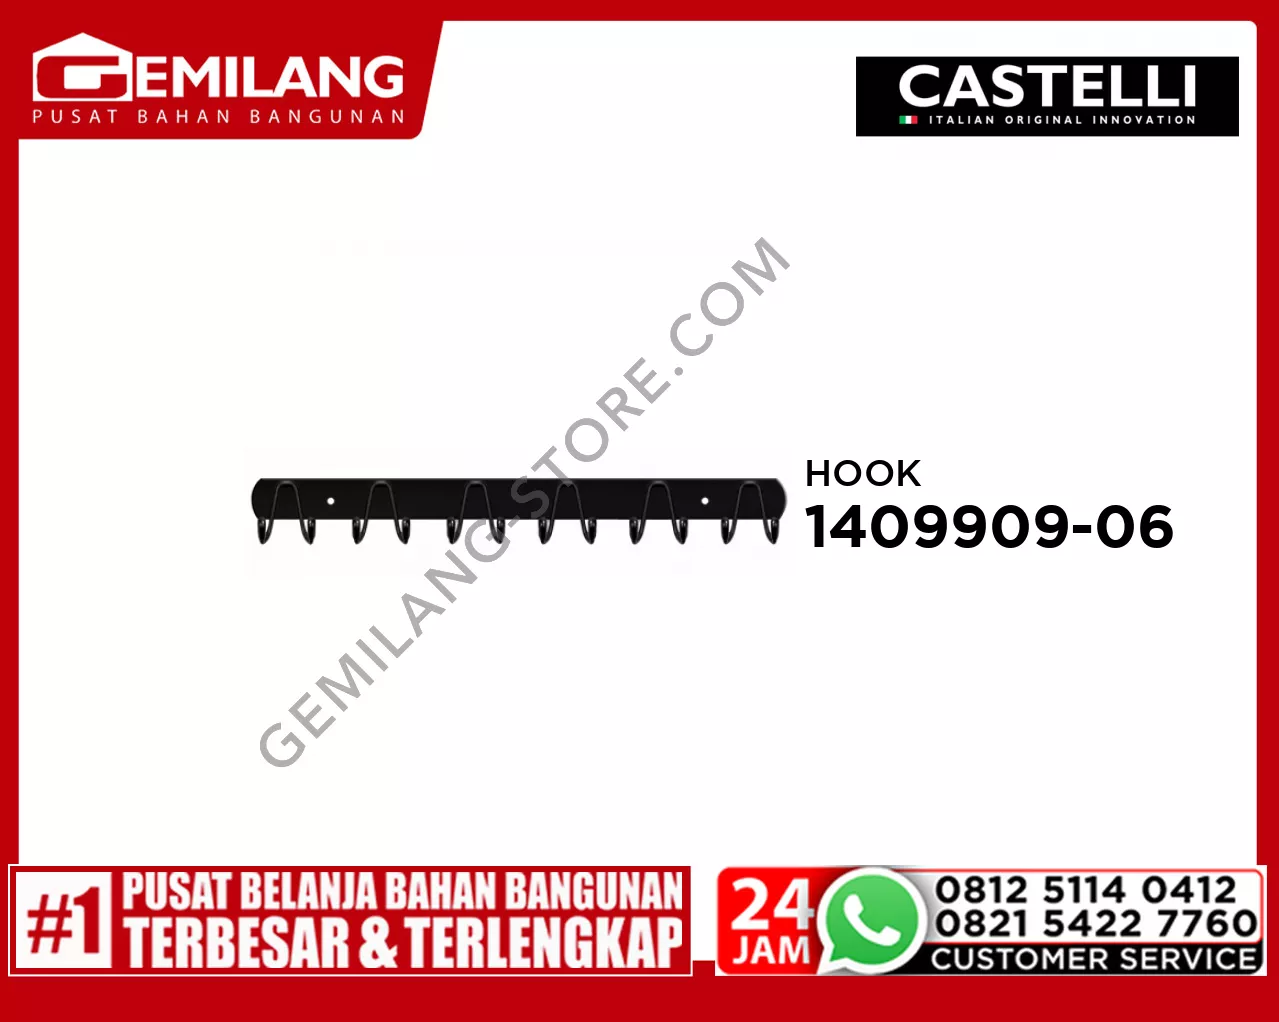 CASTELLI HOOK-6 1409909-06 BLACK